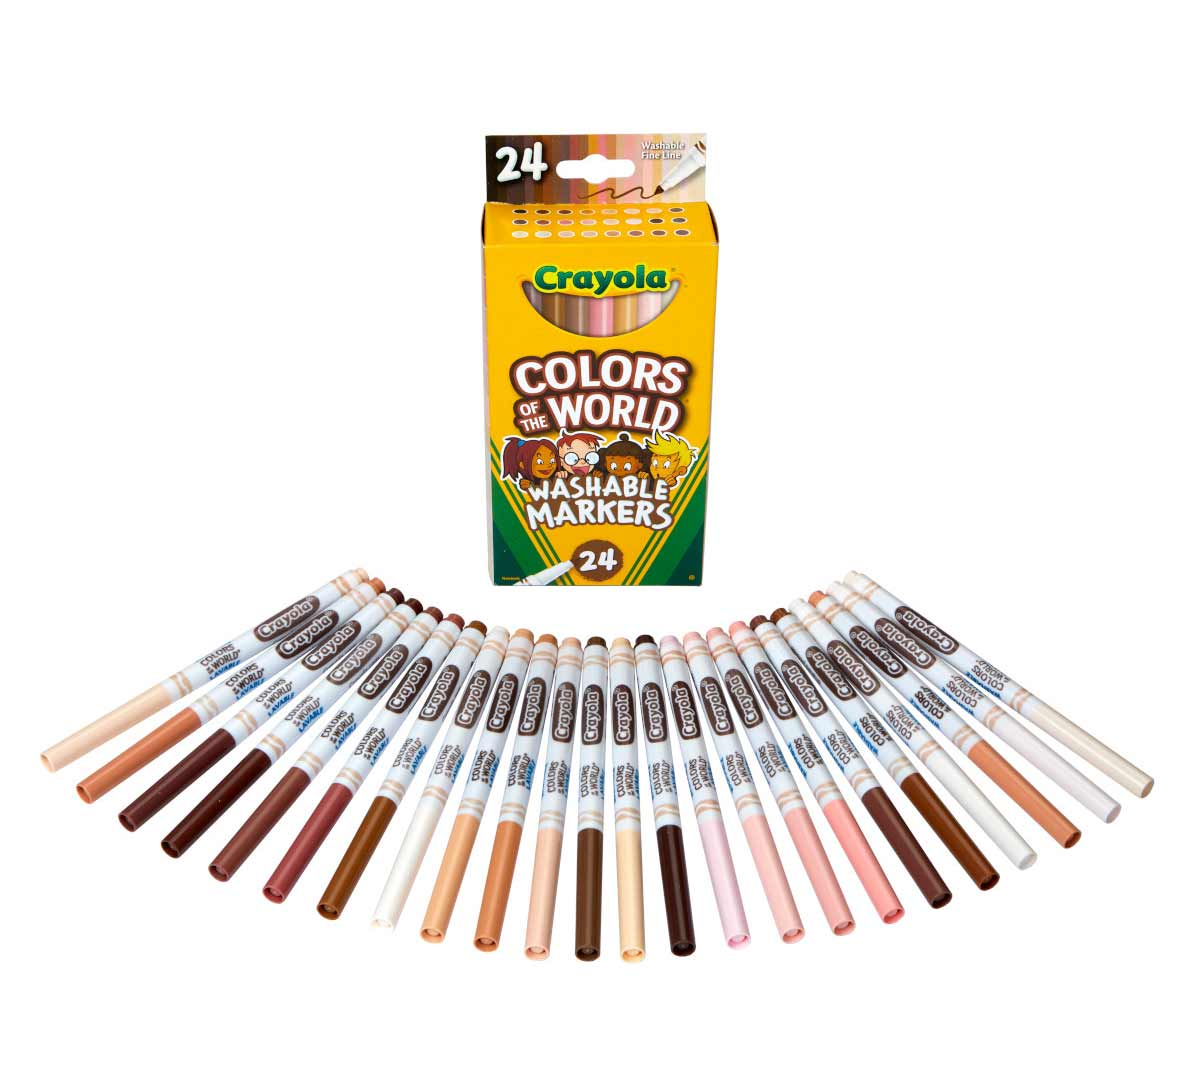 crayola colors of the world washable colors 24 || الوان شينية ٢٤ لون درجات الوان البشرة